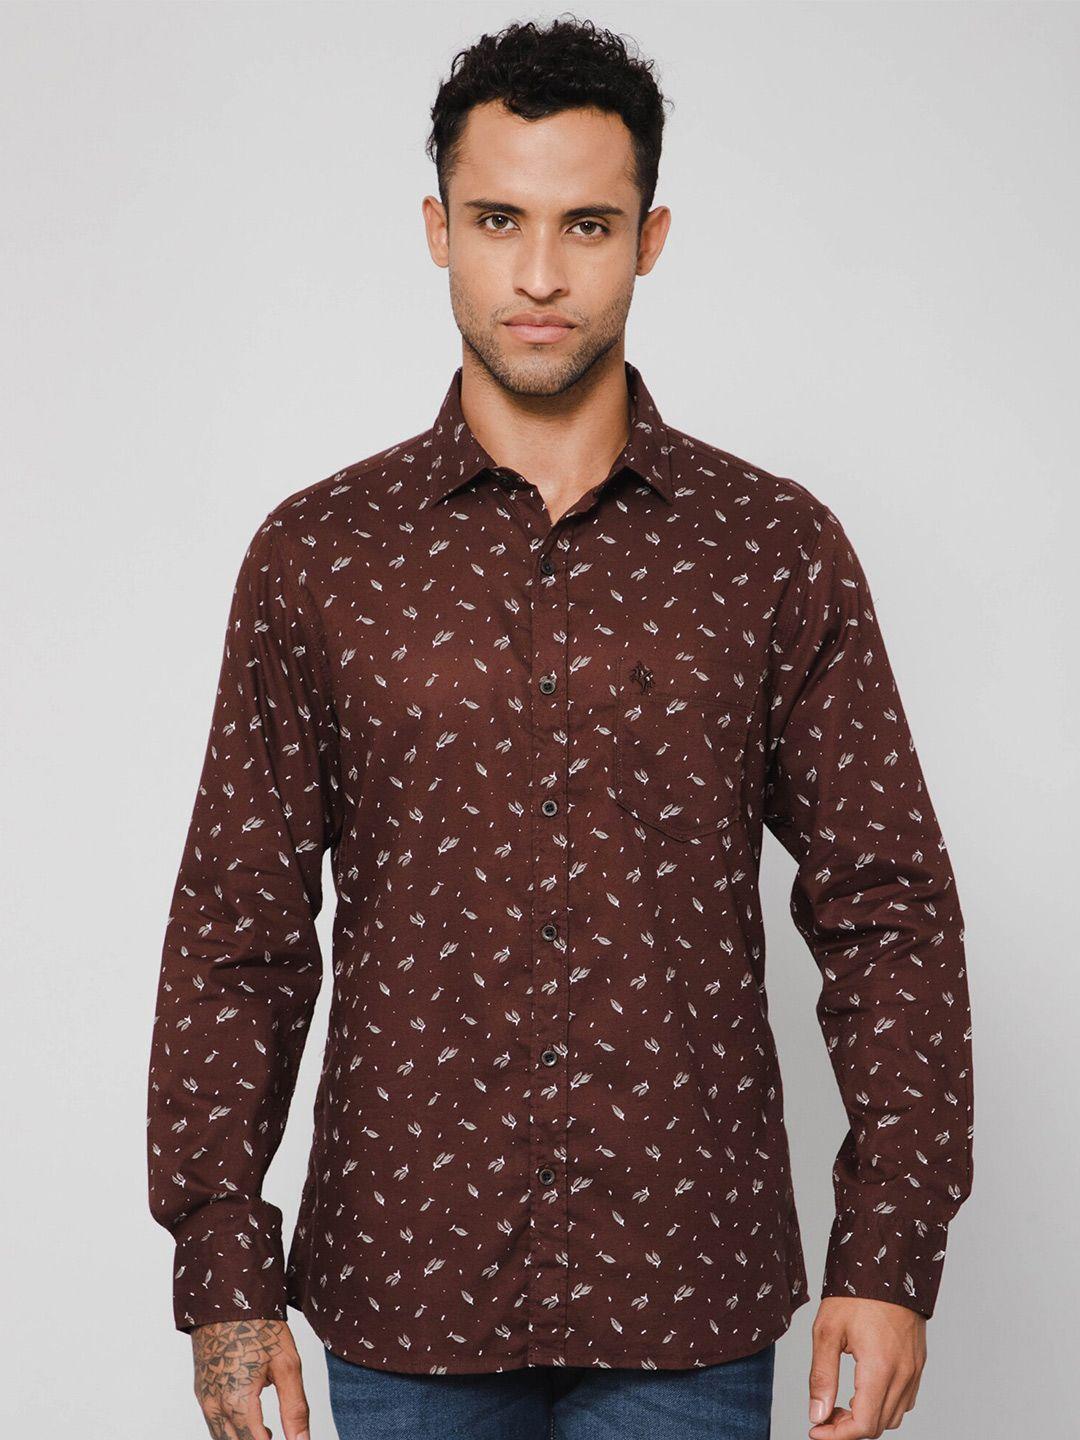 cantabil floral printed spread collar cotton casual shirt